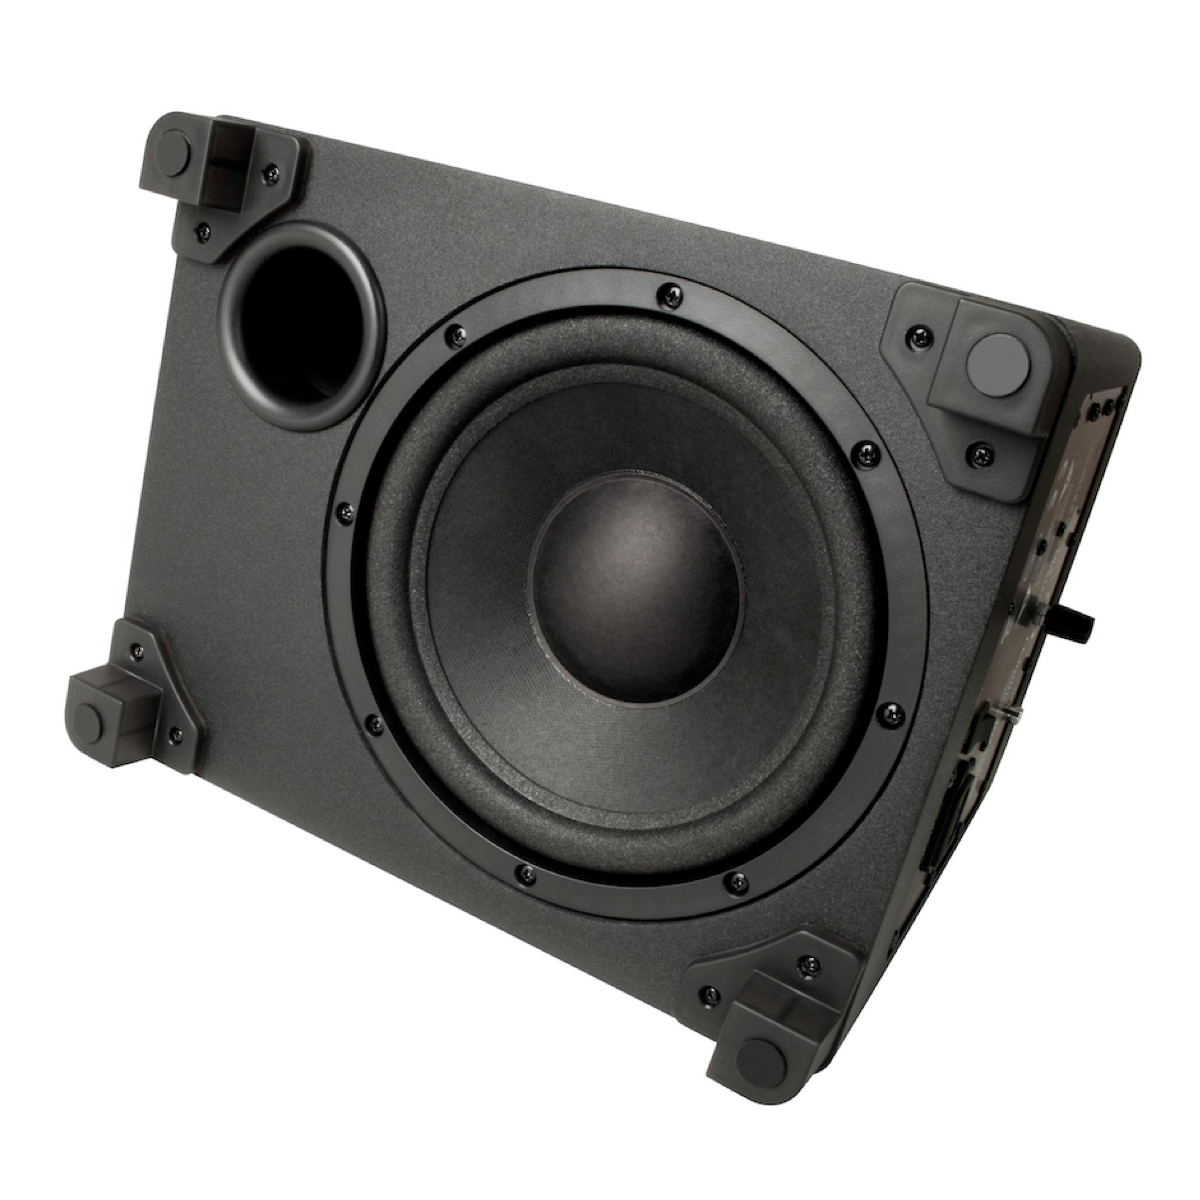 Definitive Technology ProCinema 400 - 5.1 Channel Speaker System - AVStore